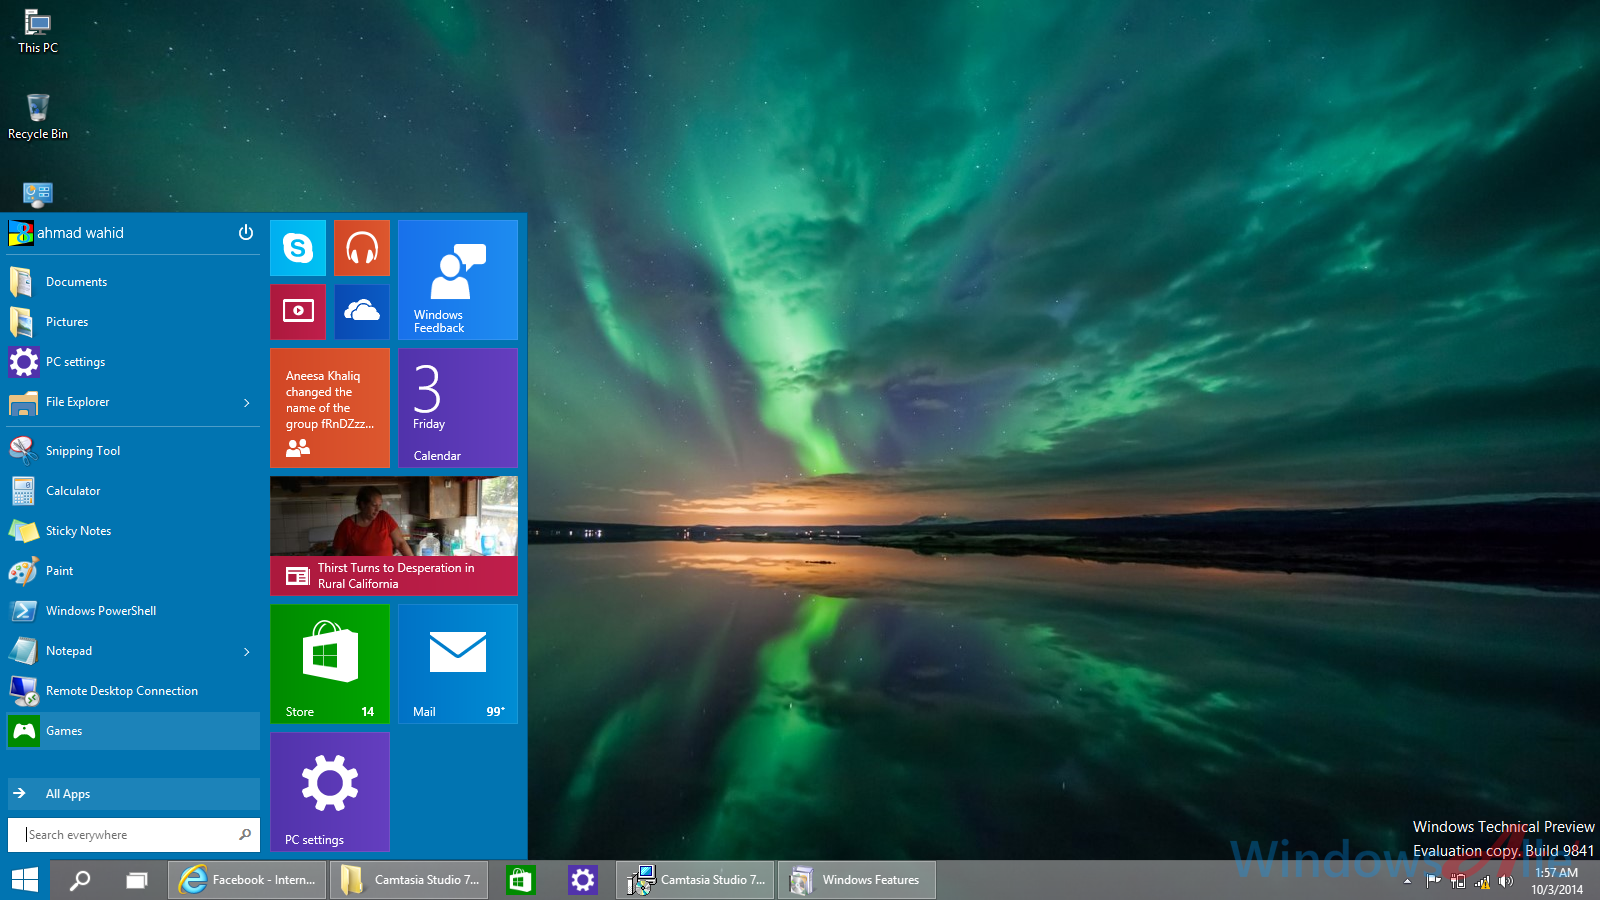 Windows 10 Technical Preview Walkthrough of Start Menu multi